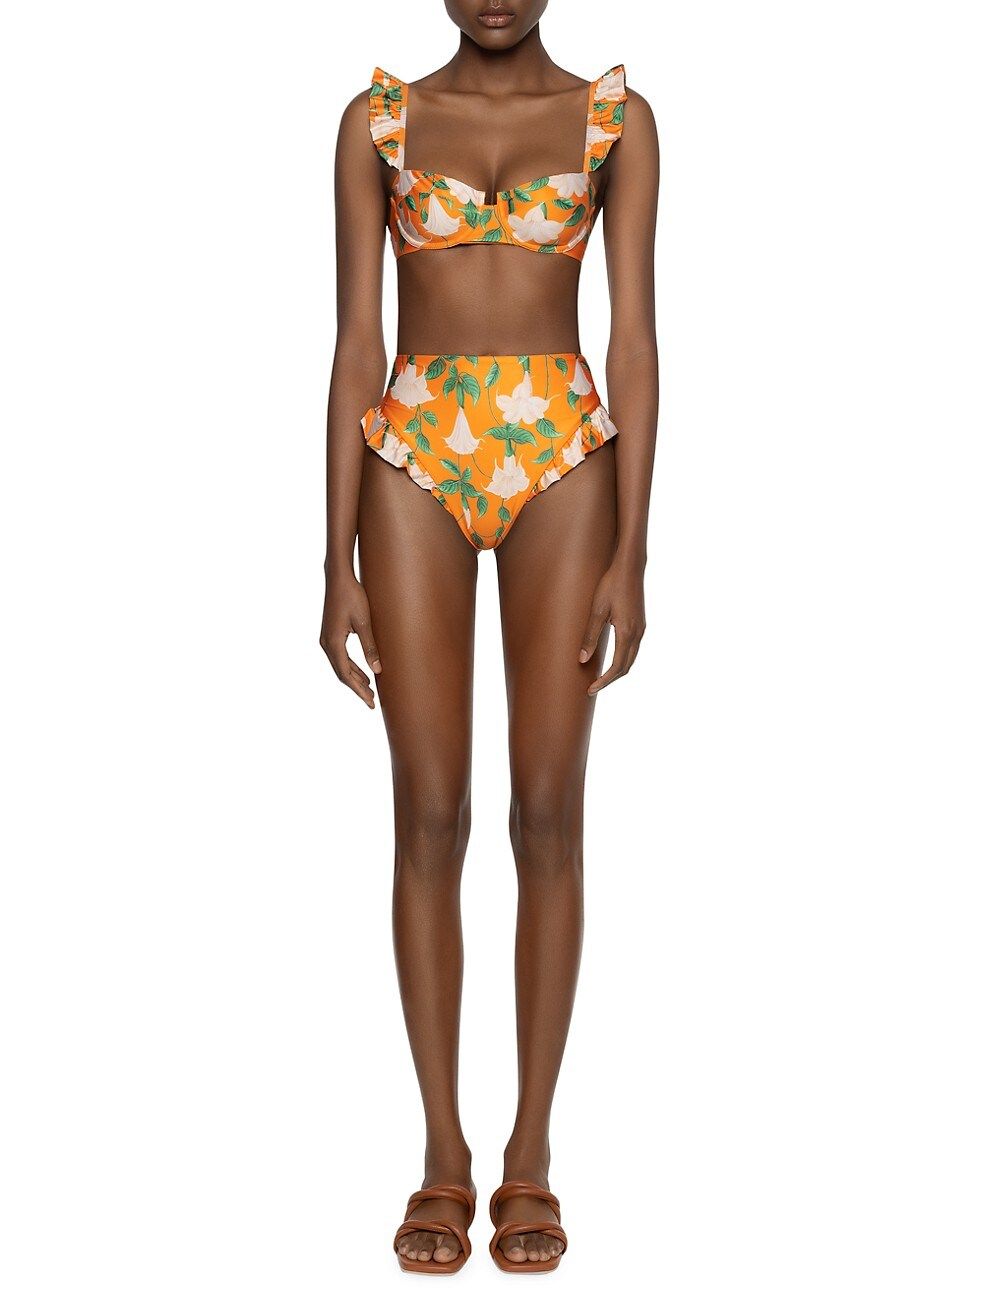 Curandera Kiwi Sabanero Dorado Bikini Top | Saks Fifth Avenue